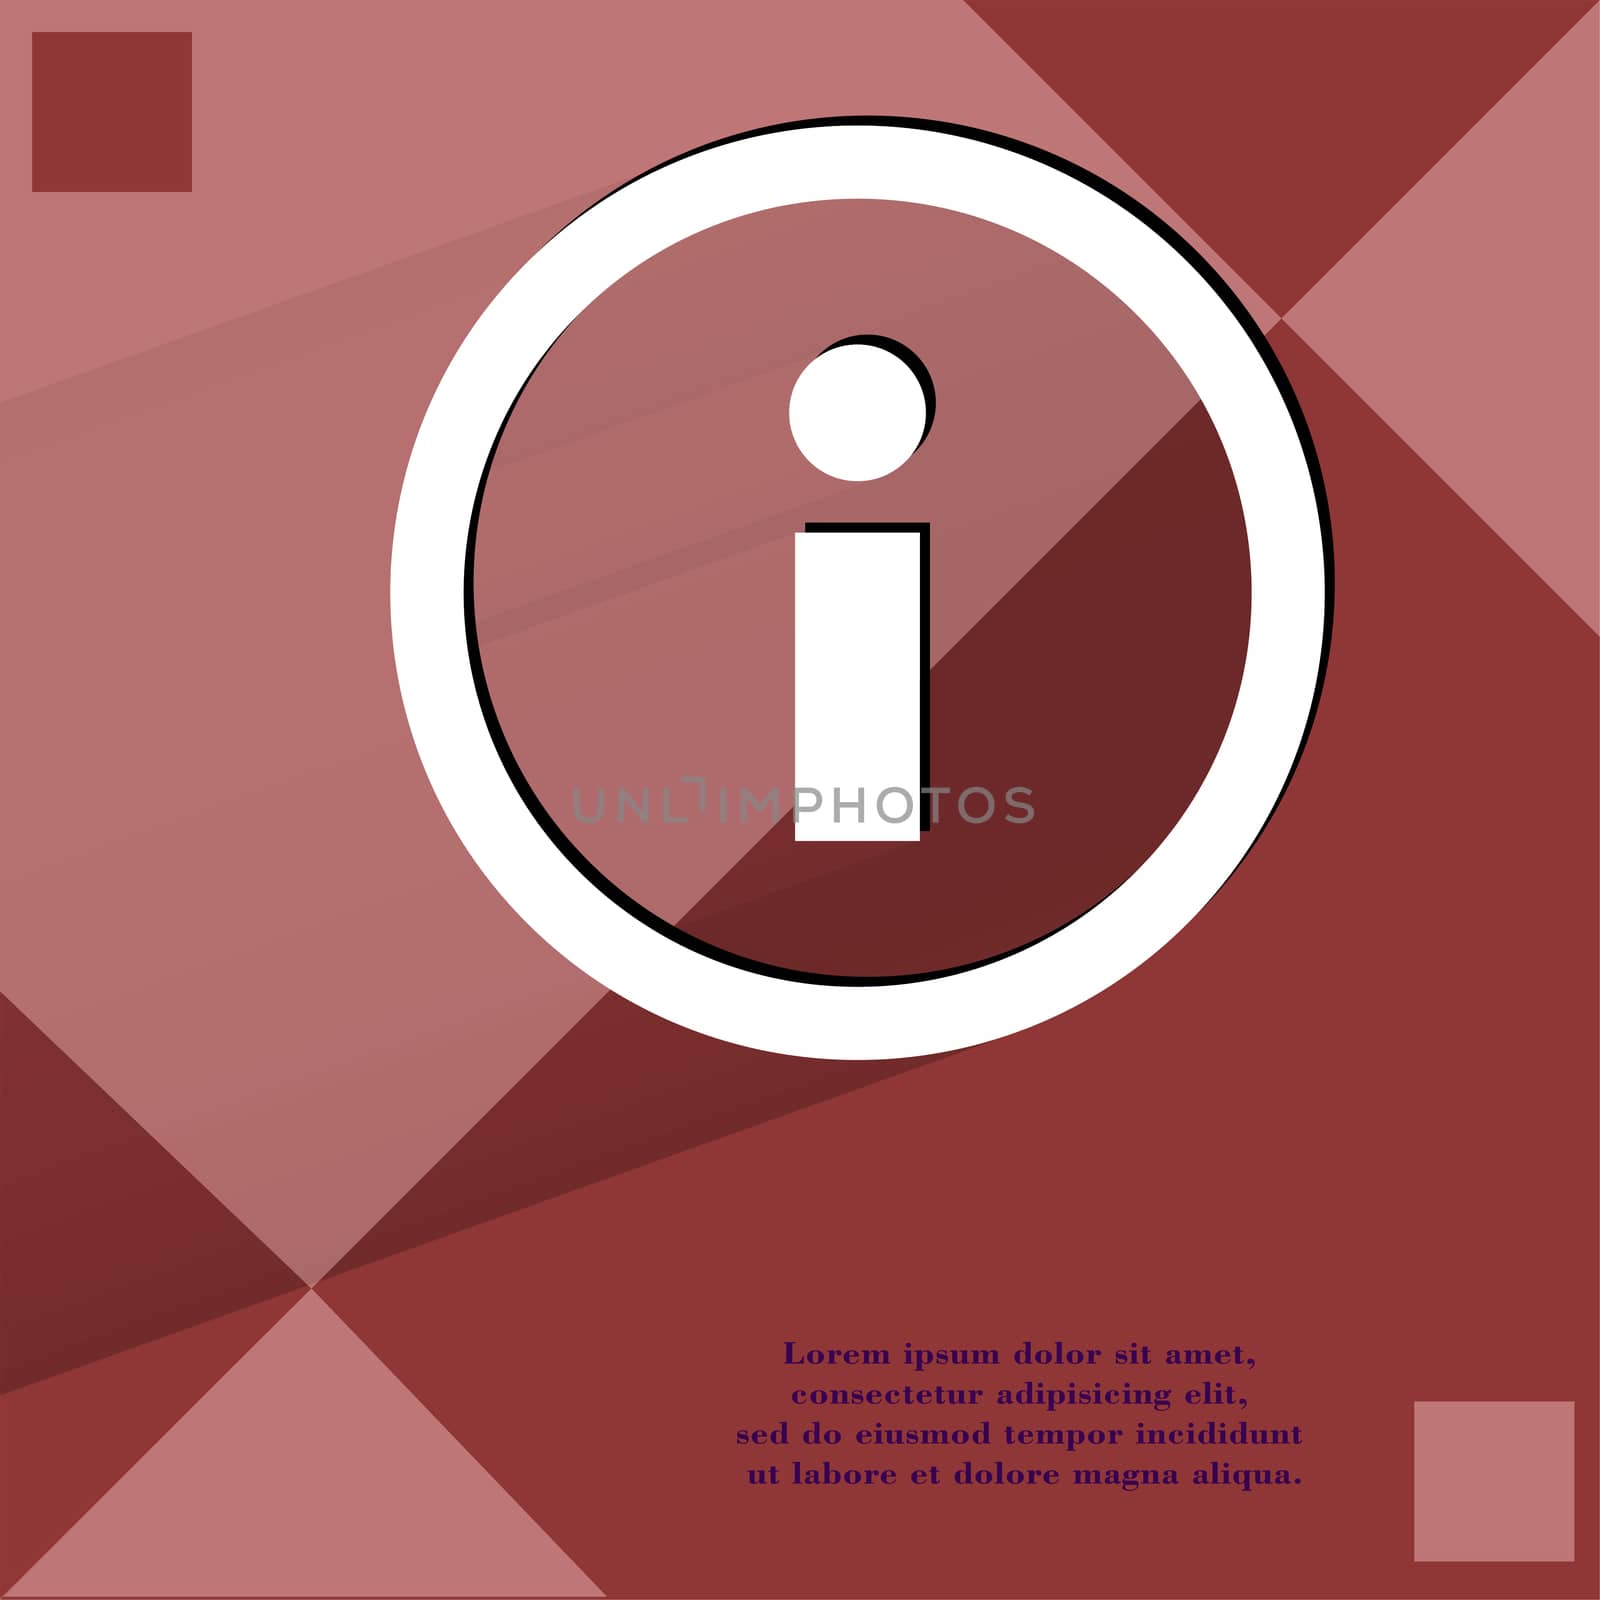 info. Flat modern web design on a flat geometric abstract background  by serhii_lohvyniuk